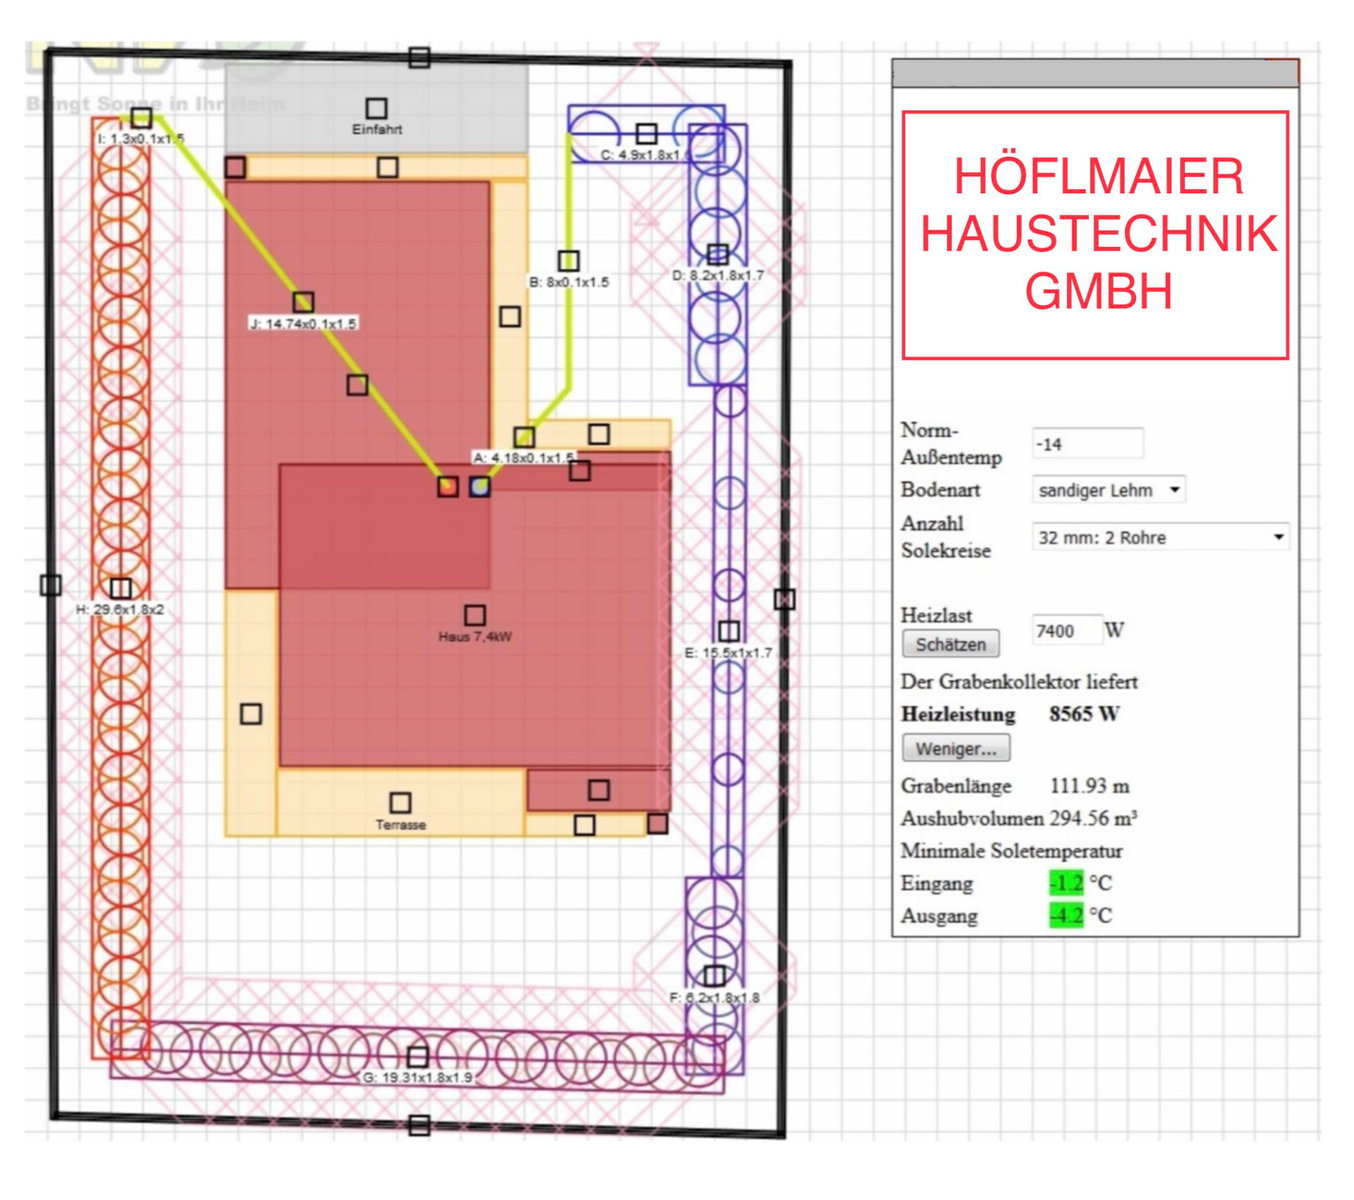 Ringgrabenkollektor der Höflmaier Haustechnik GmbH